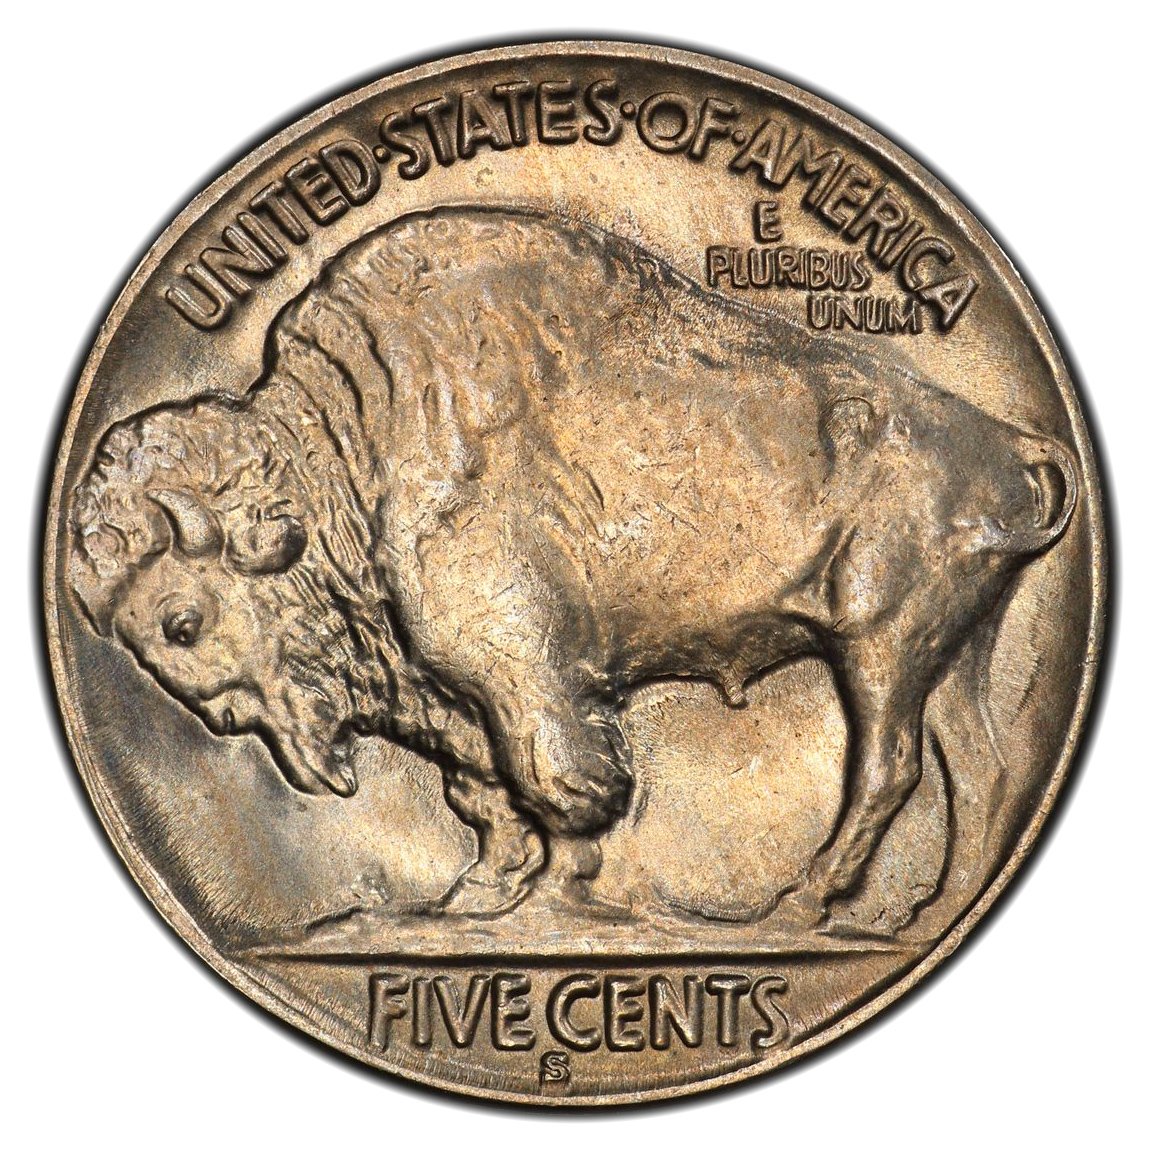 How Much Is a Buffalo Nickel Worth?